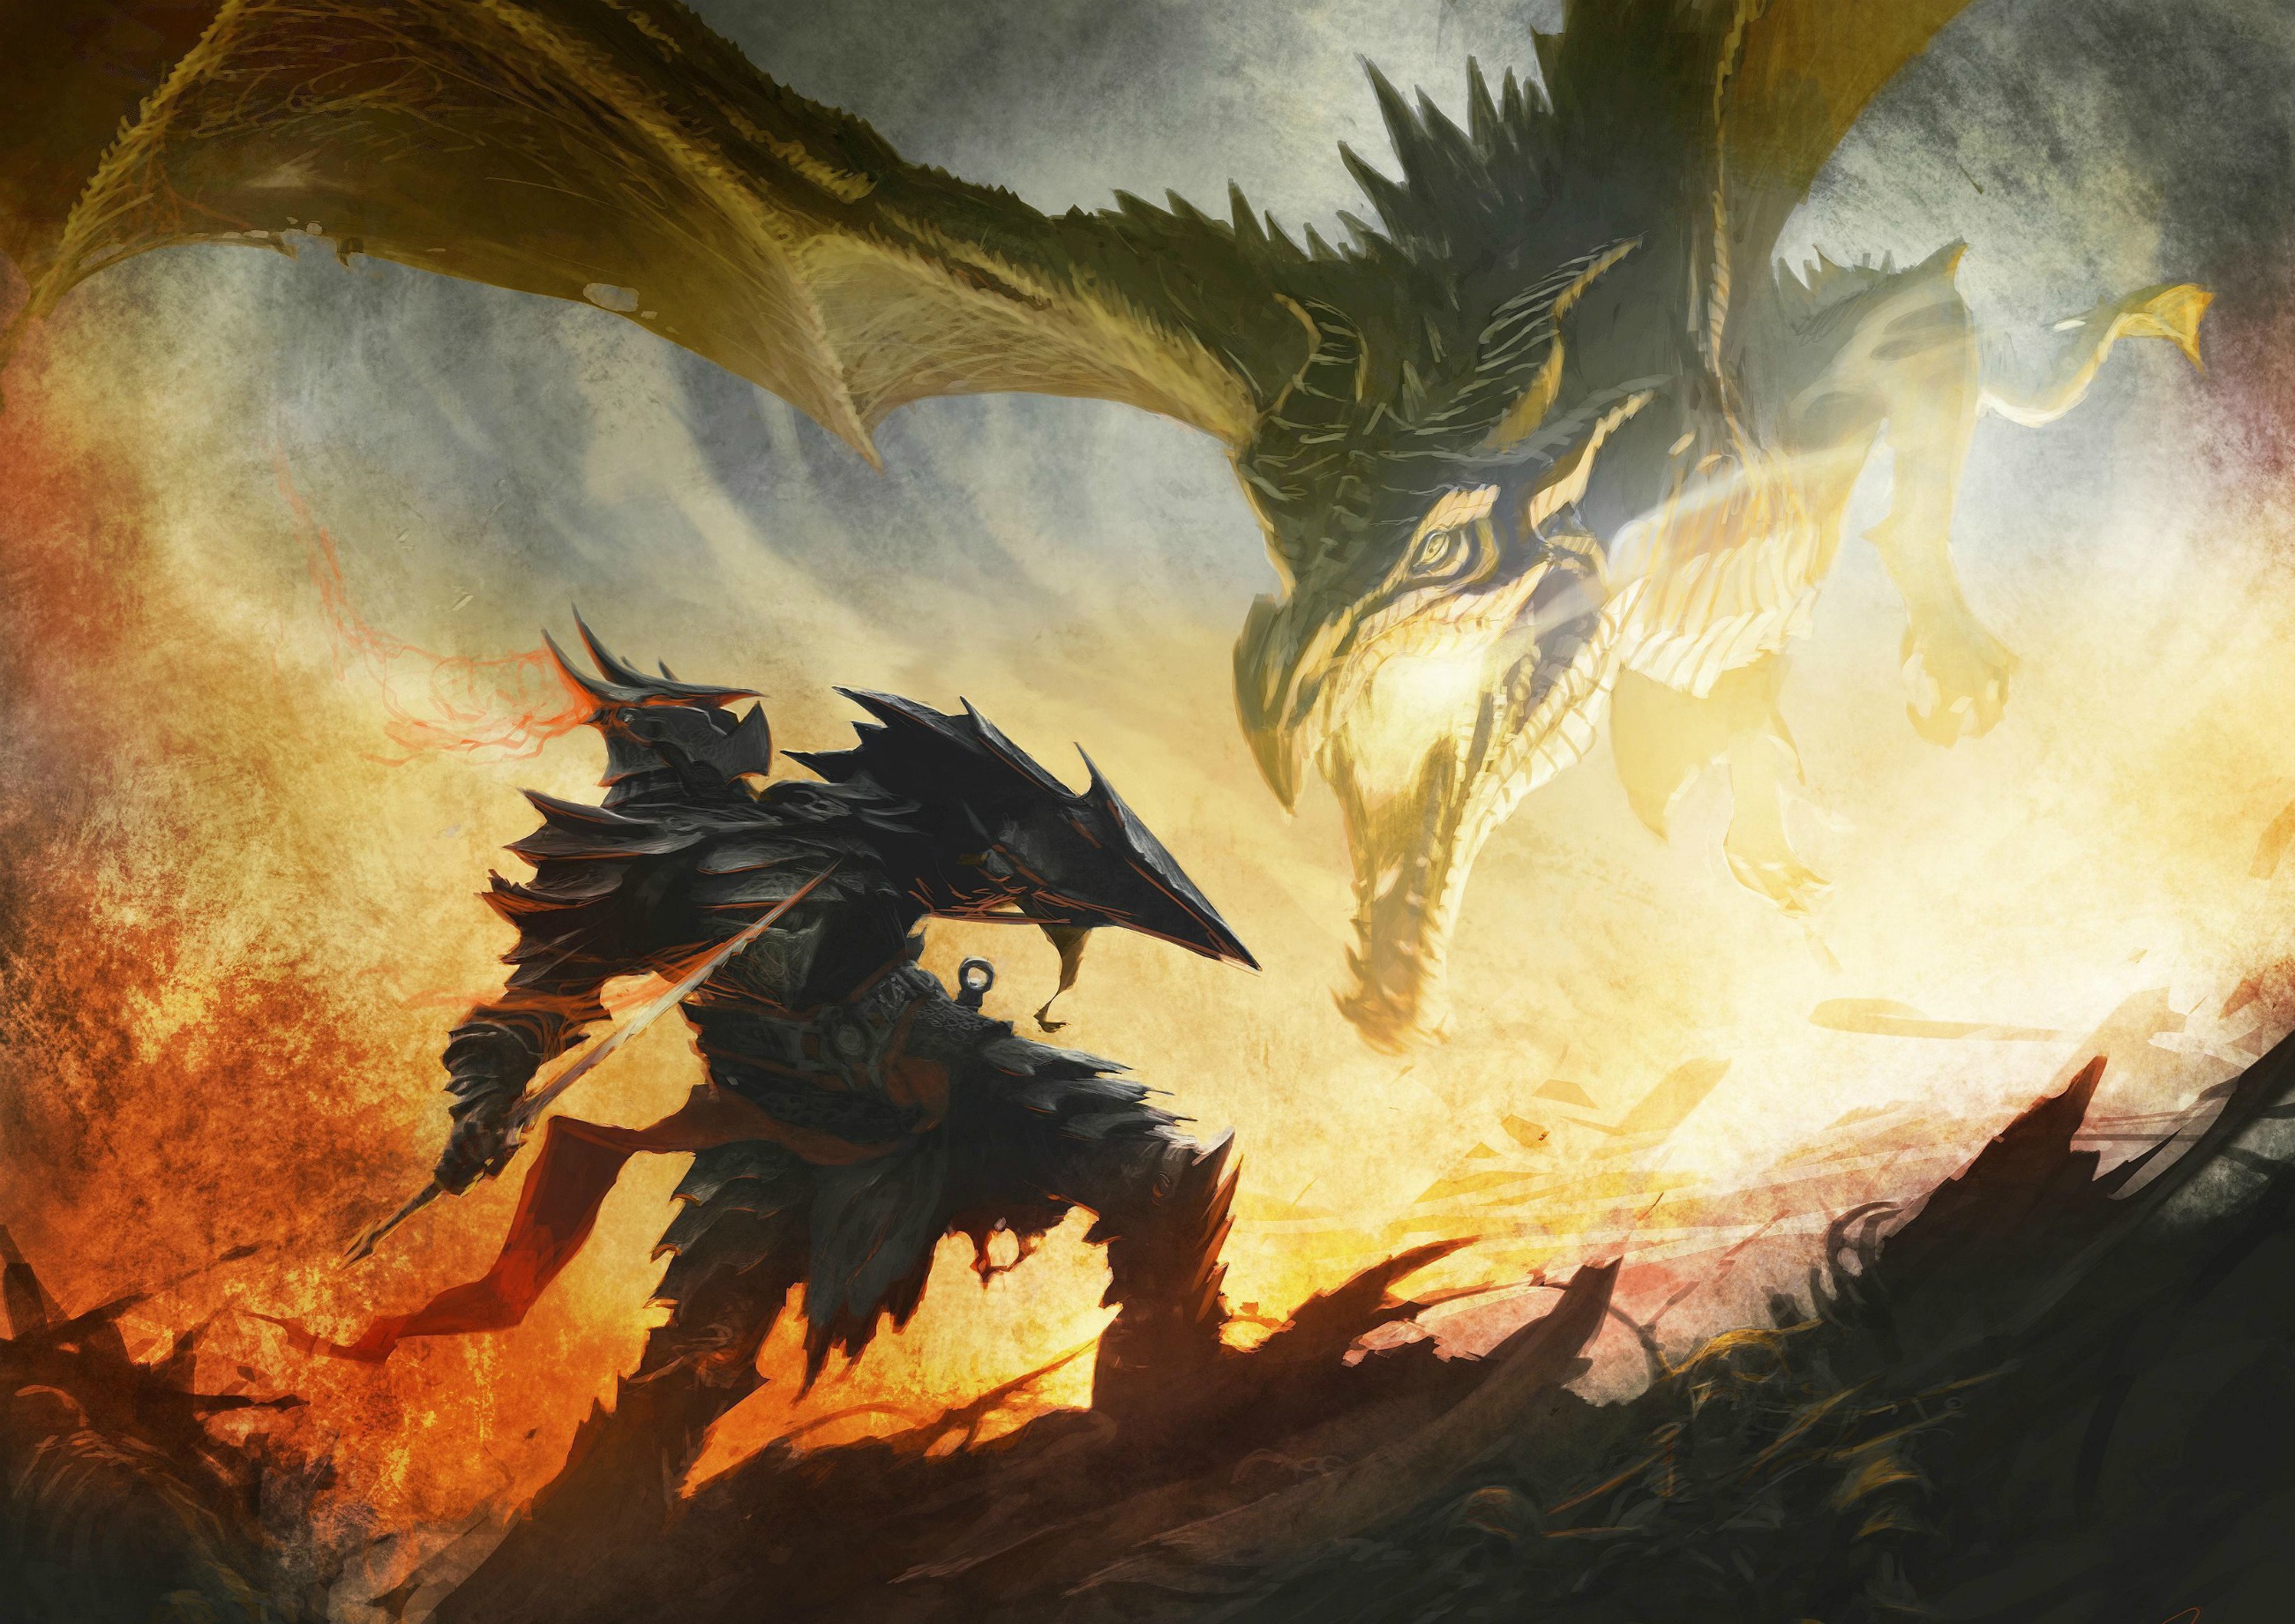 the elder scrolls v: skyrim, skyrim, video game, dragon, the elder scrolls